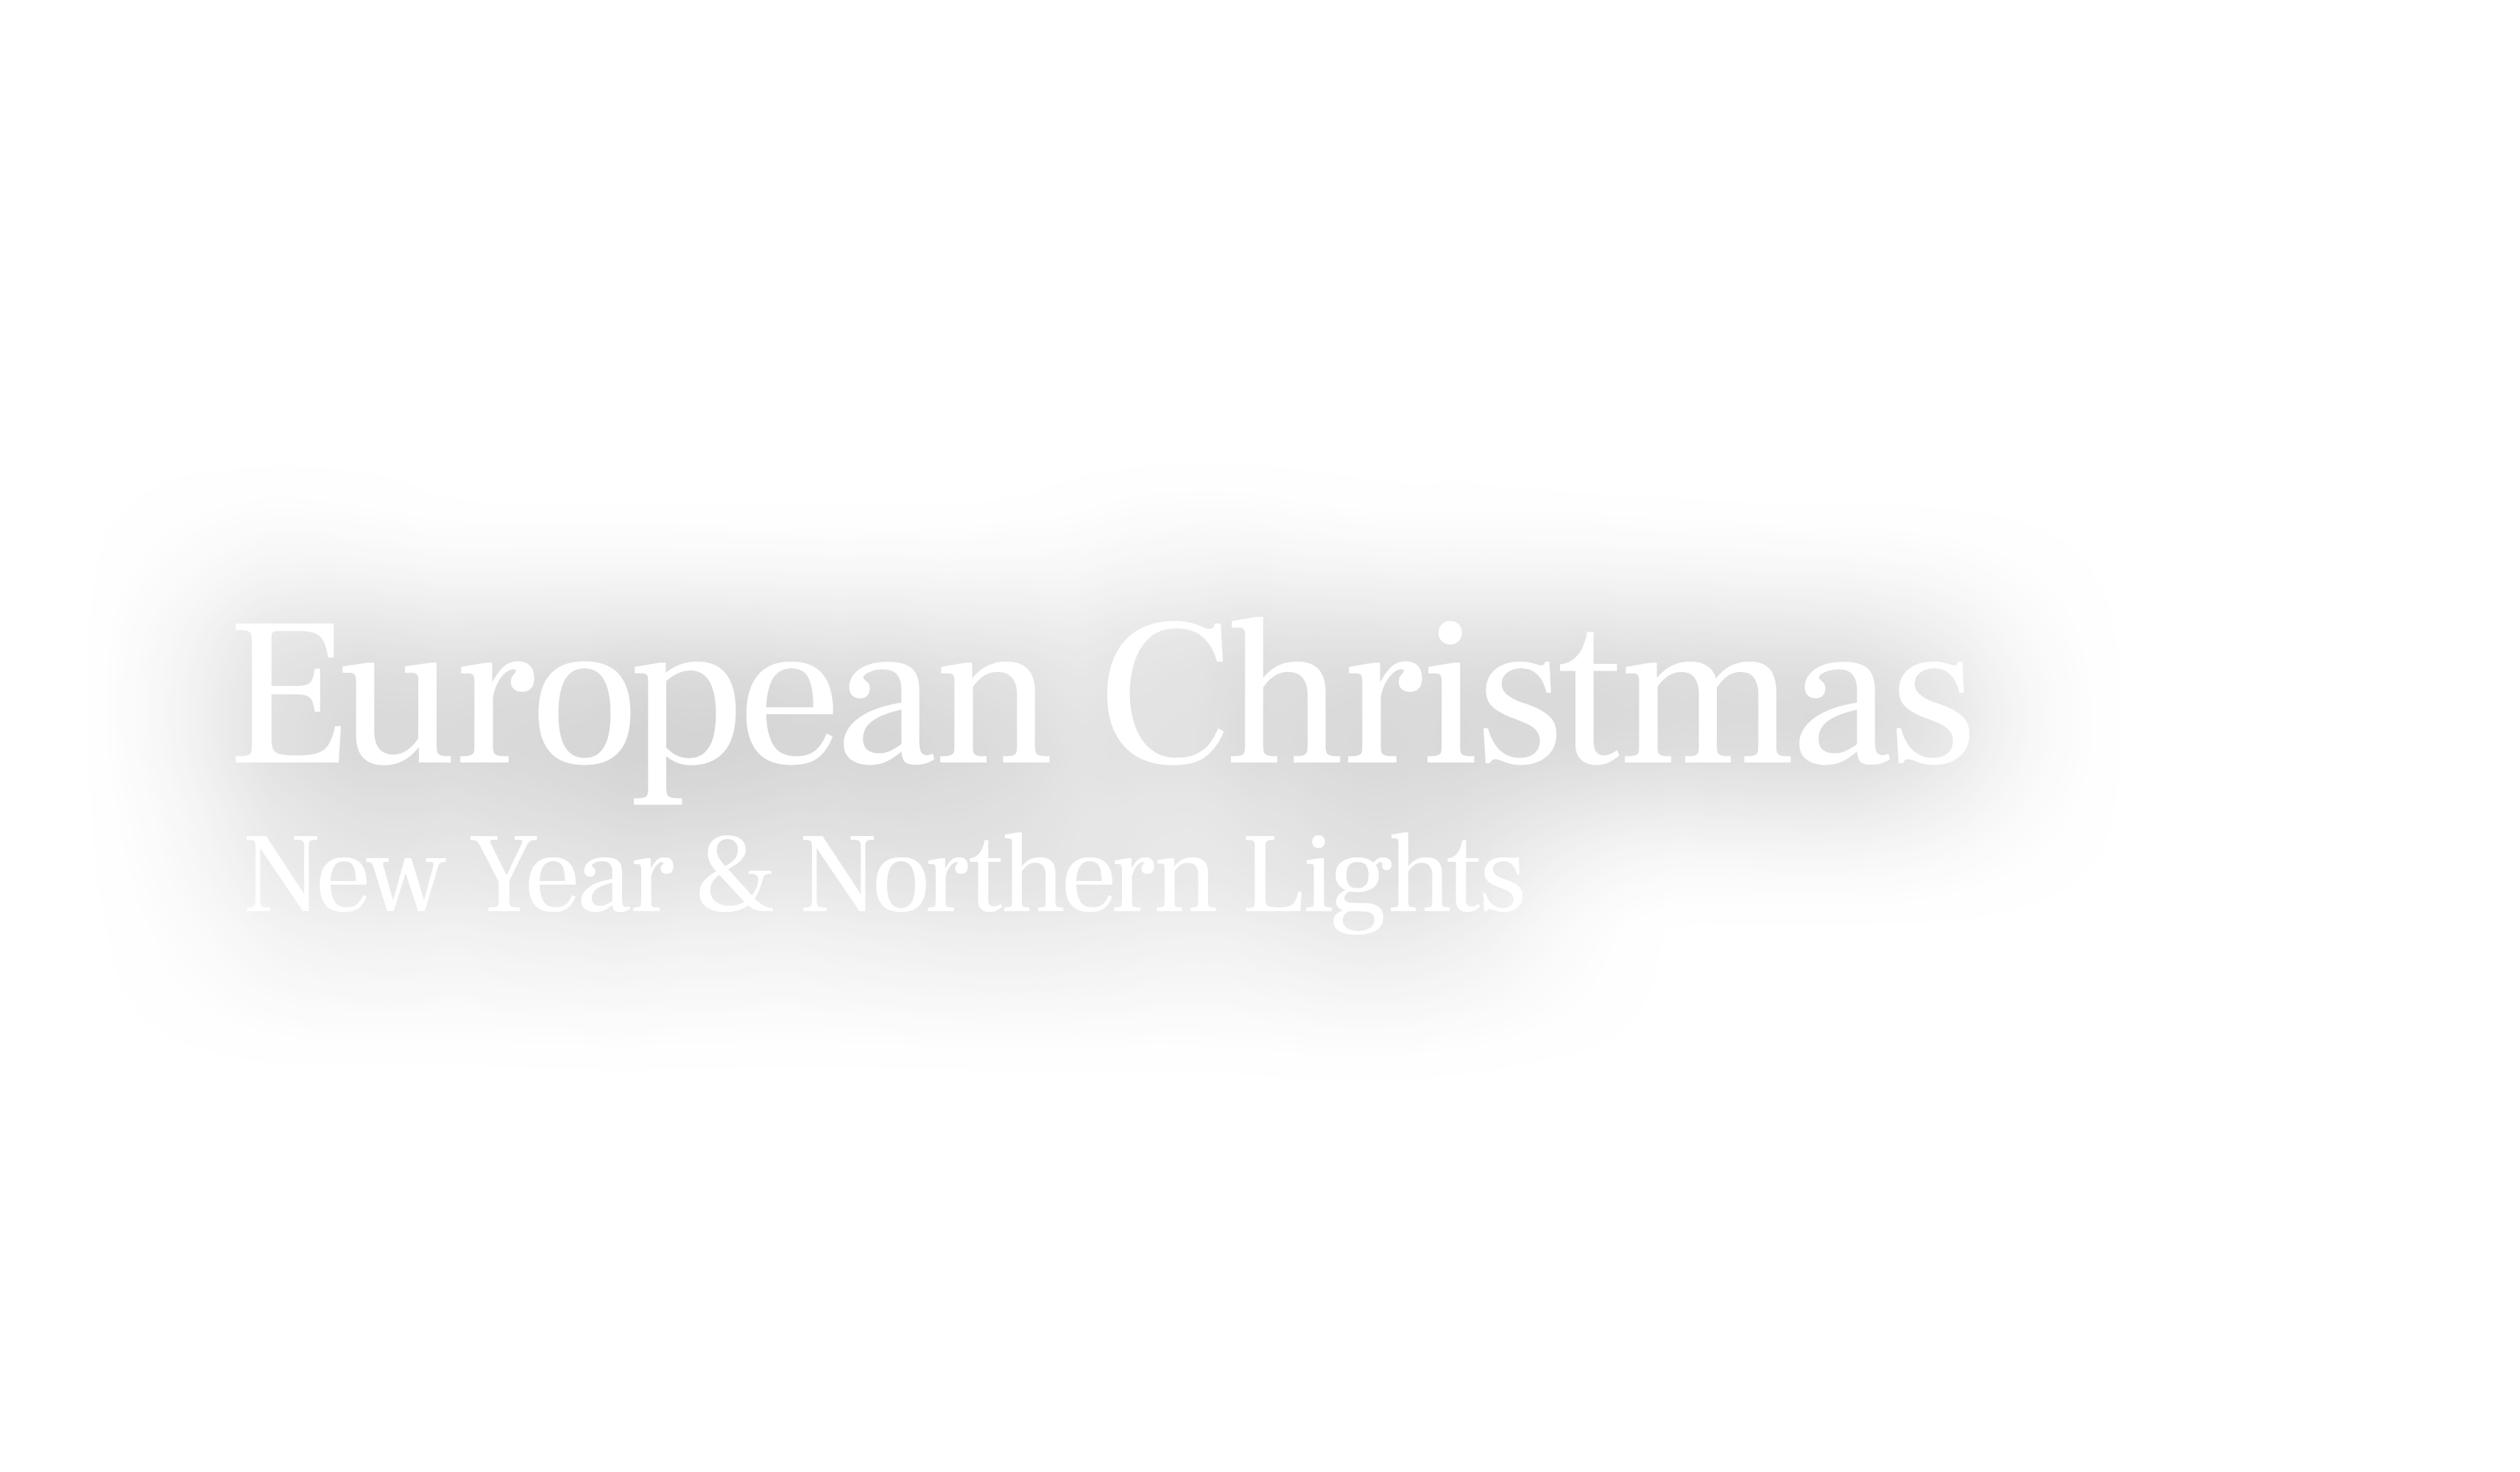 European Christmas New Year & Northern Lights